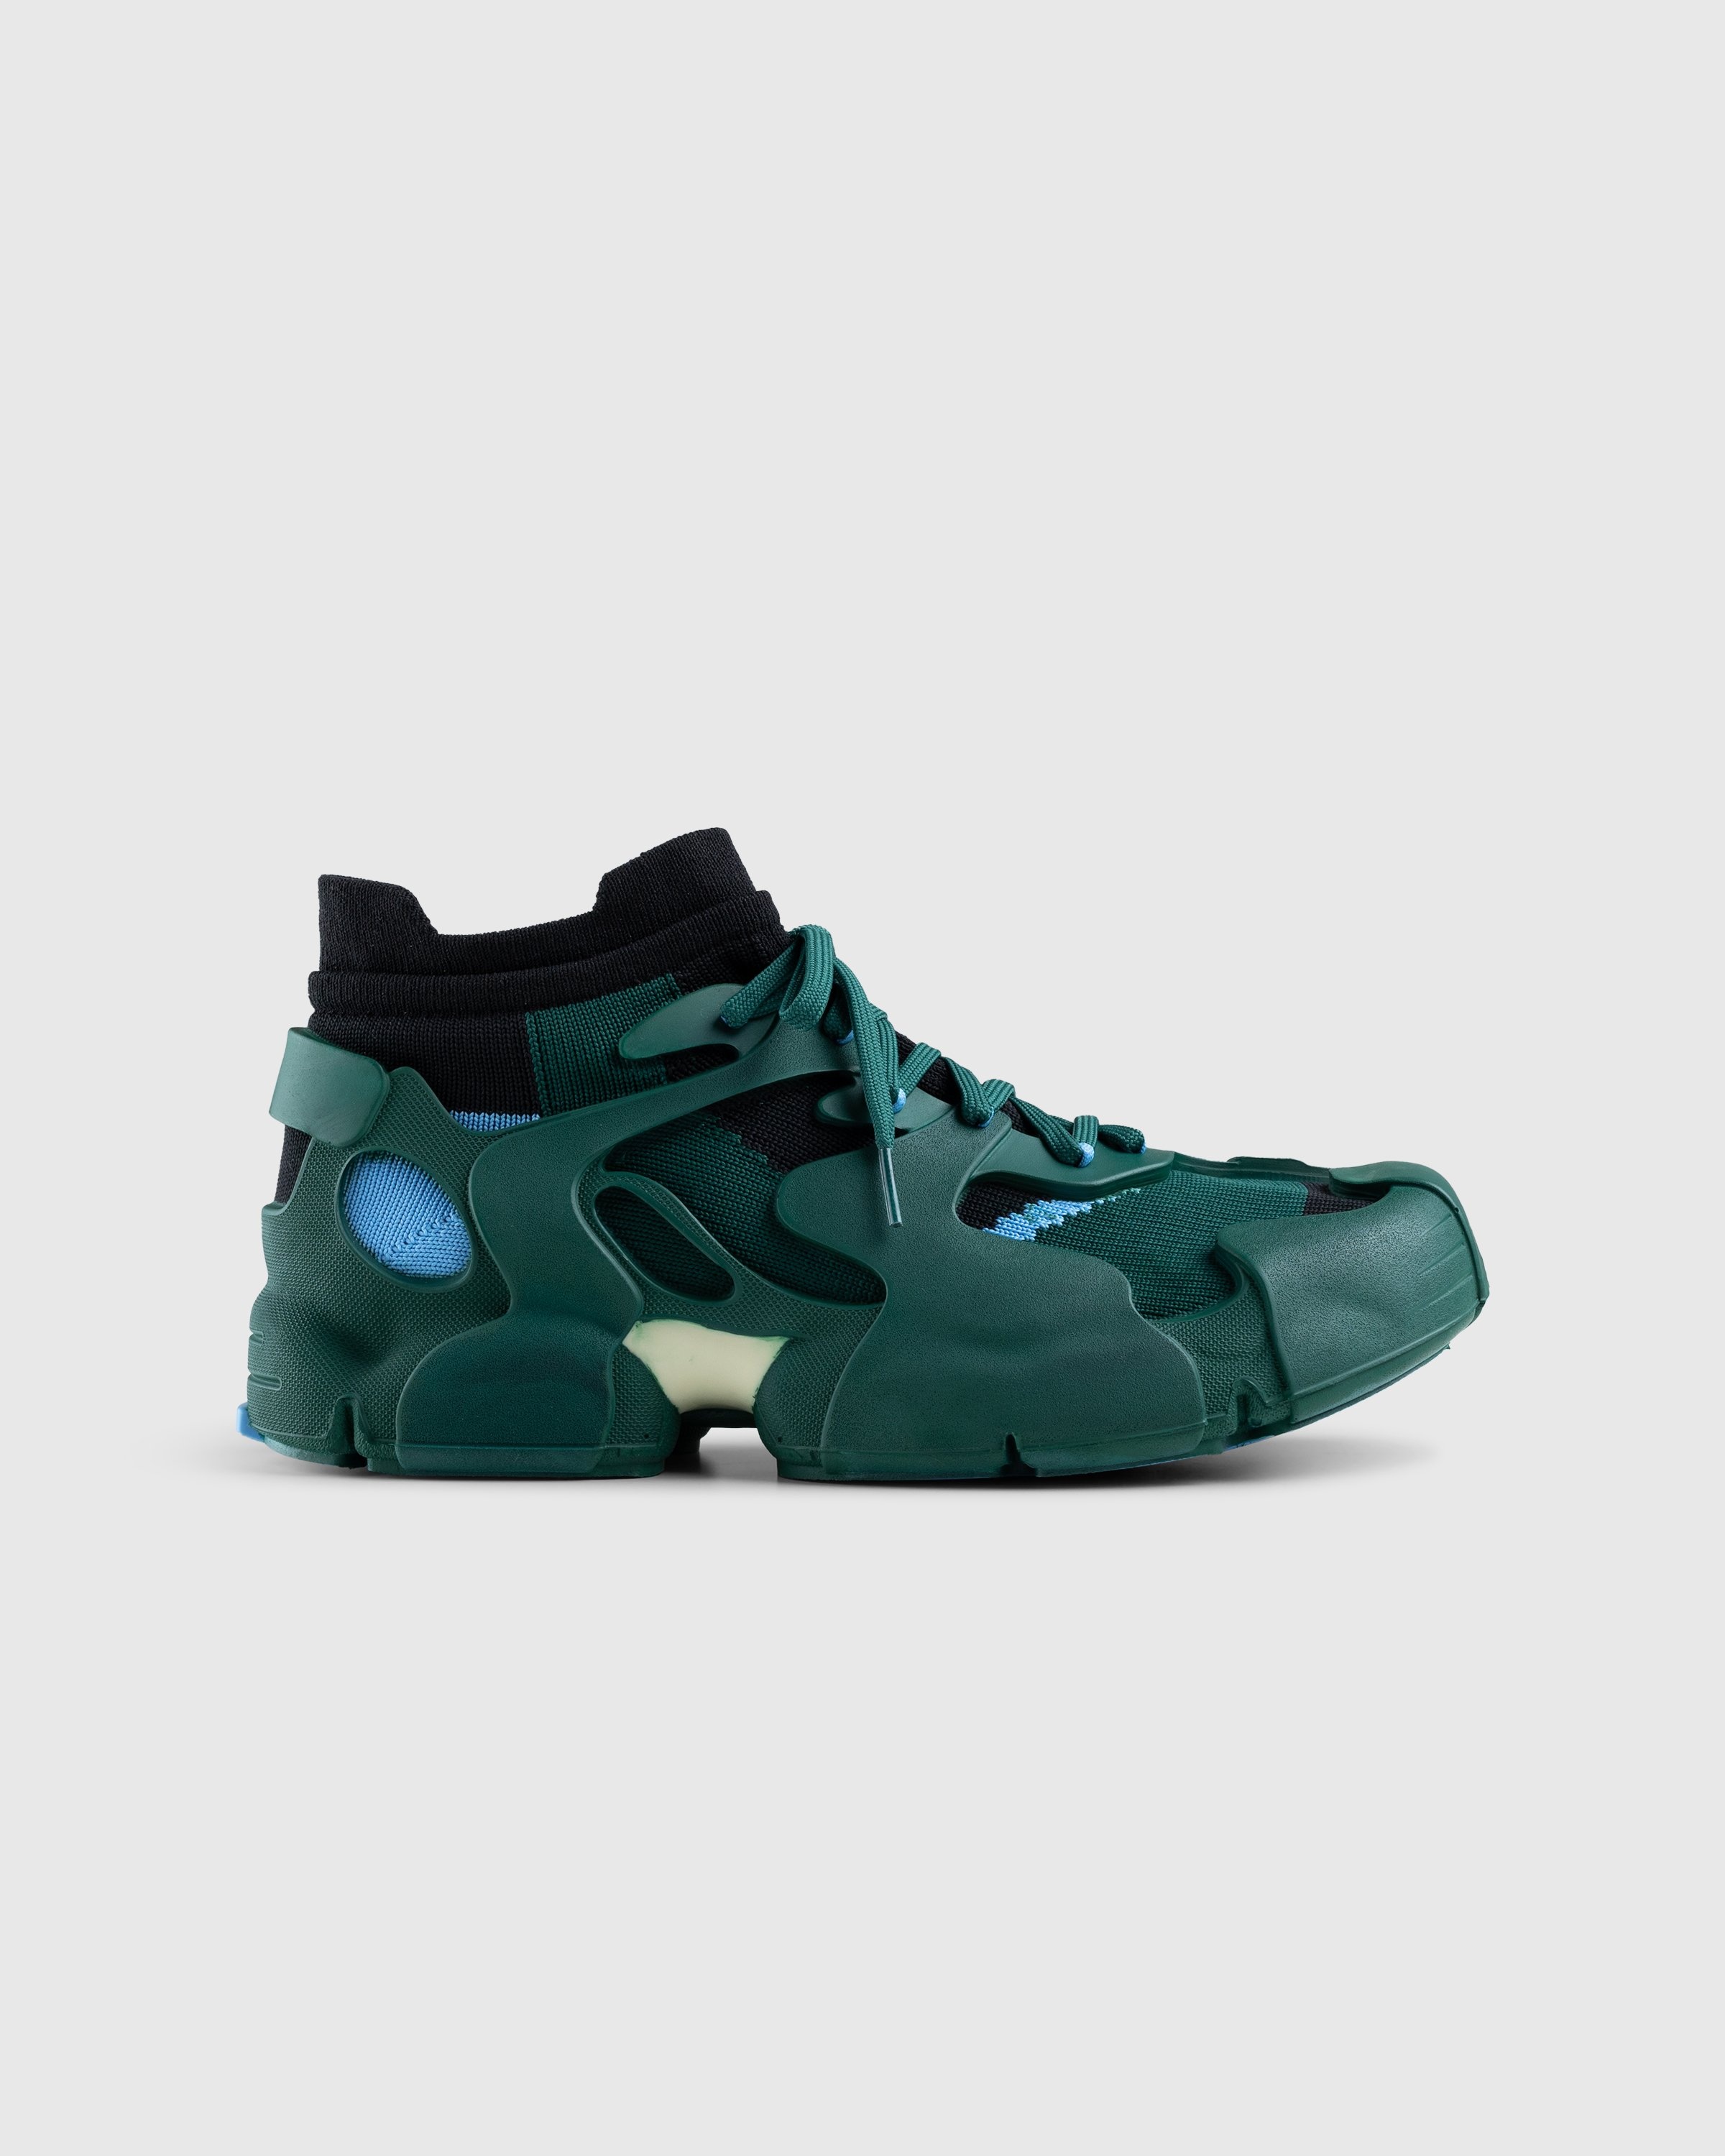 CAMPERLAB – Tossu Green - High Top Sneakers - Green - Image 1